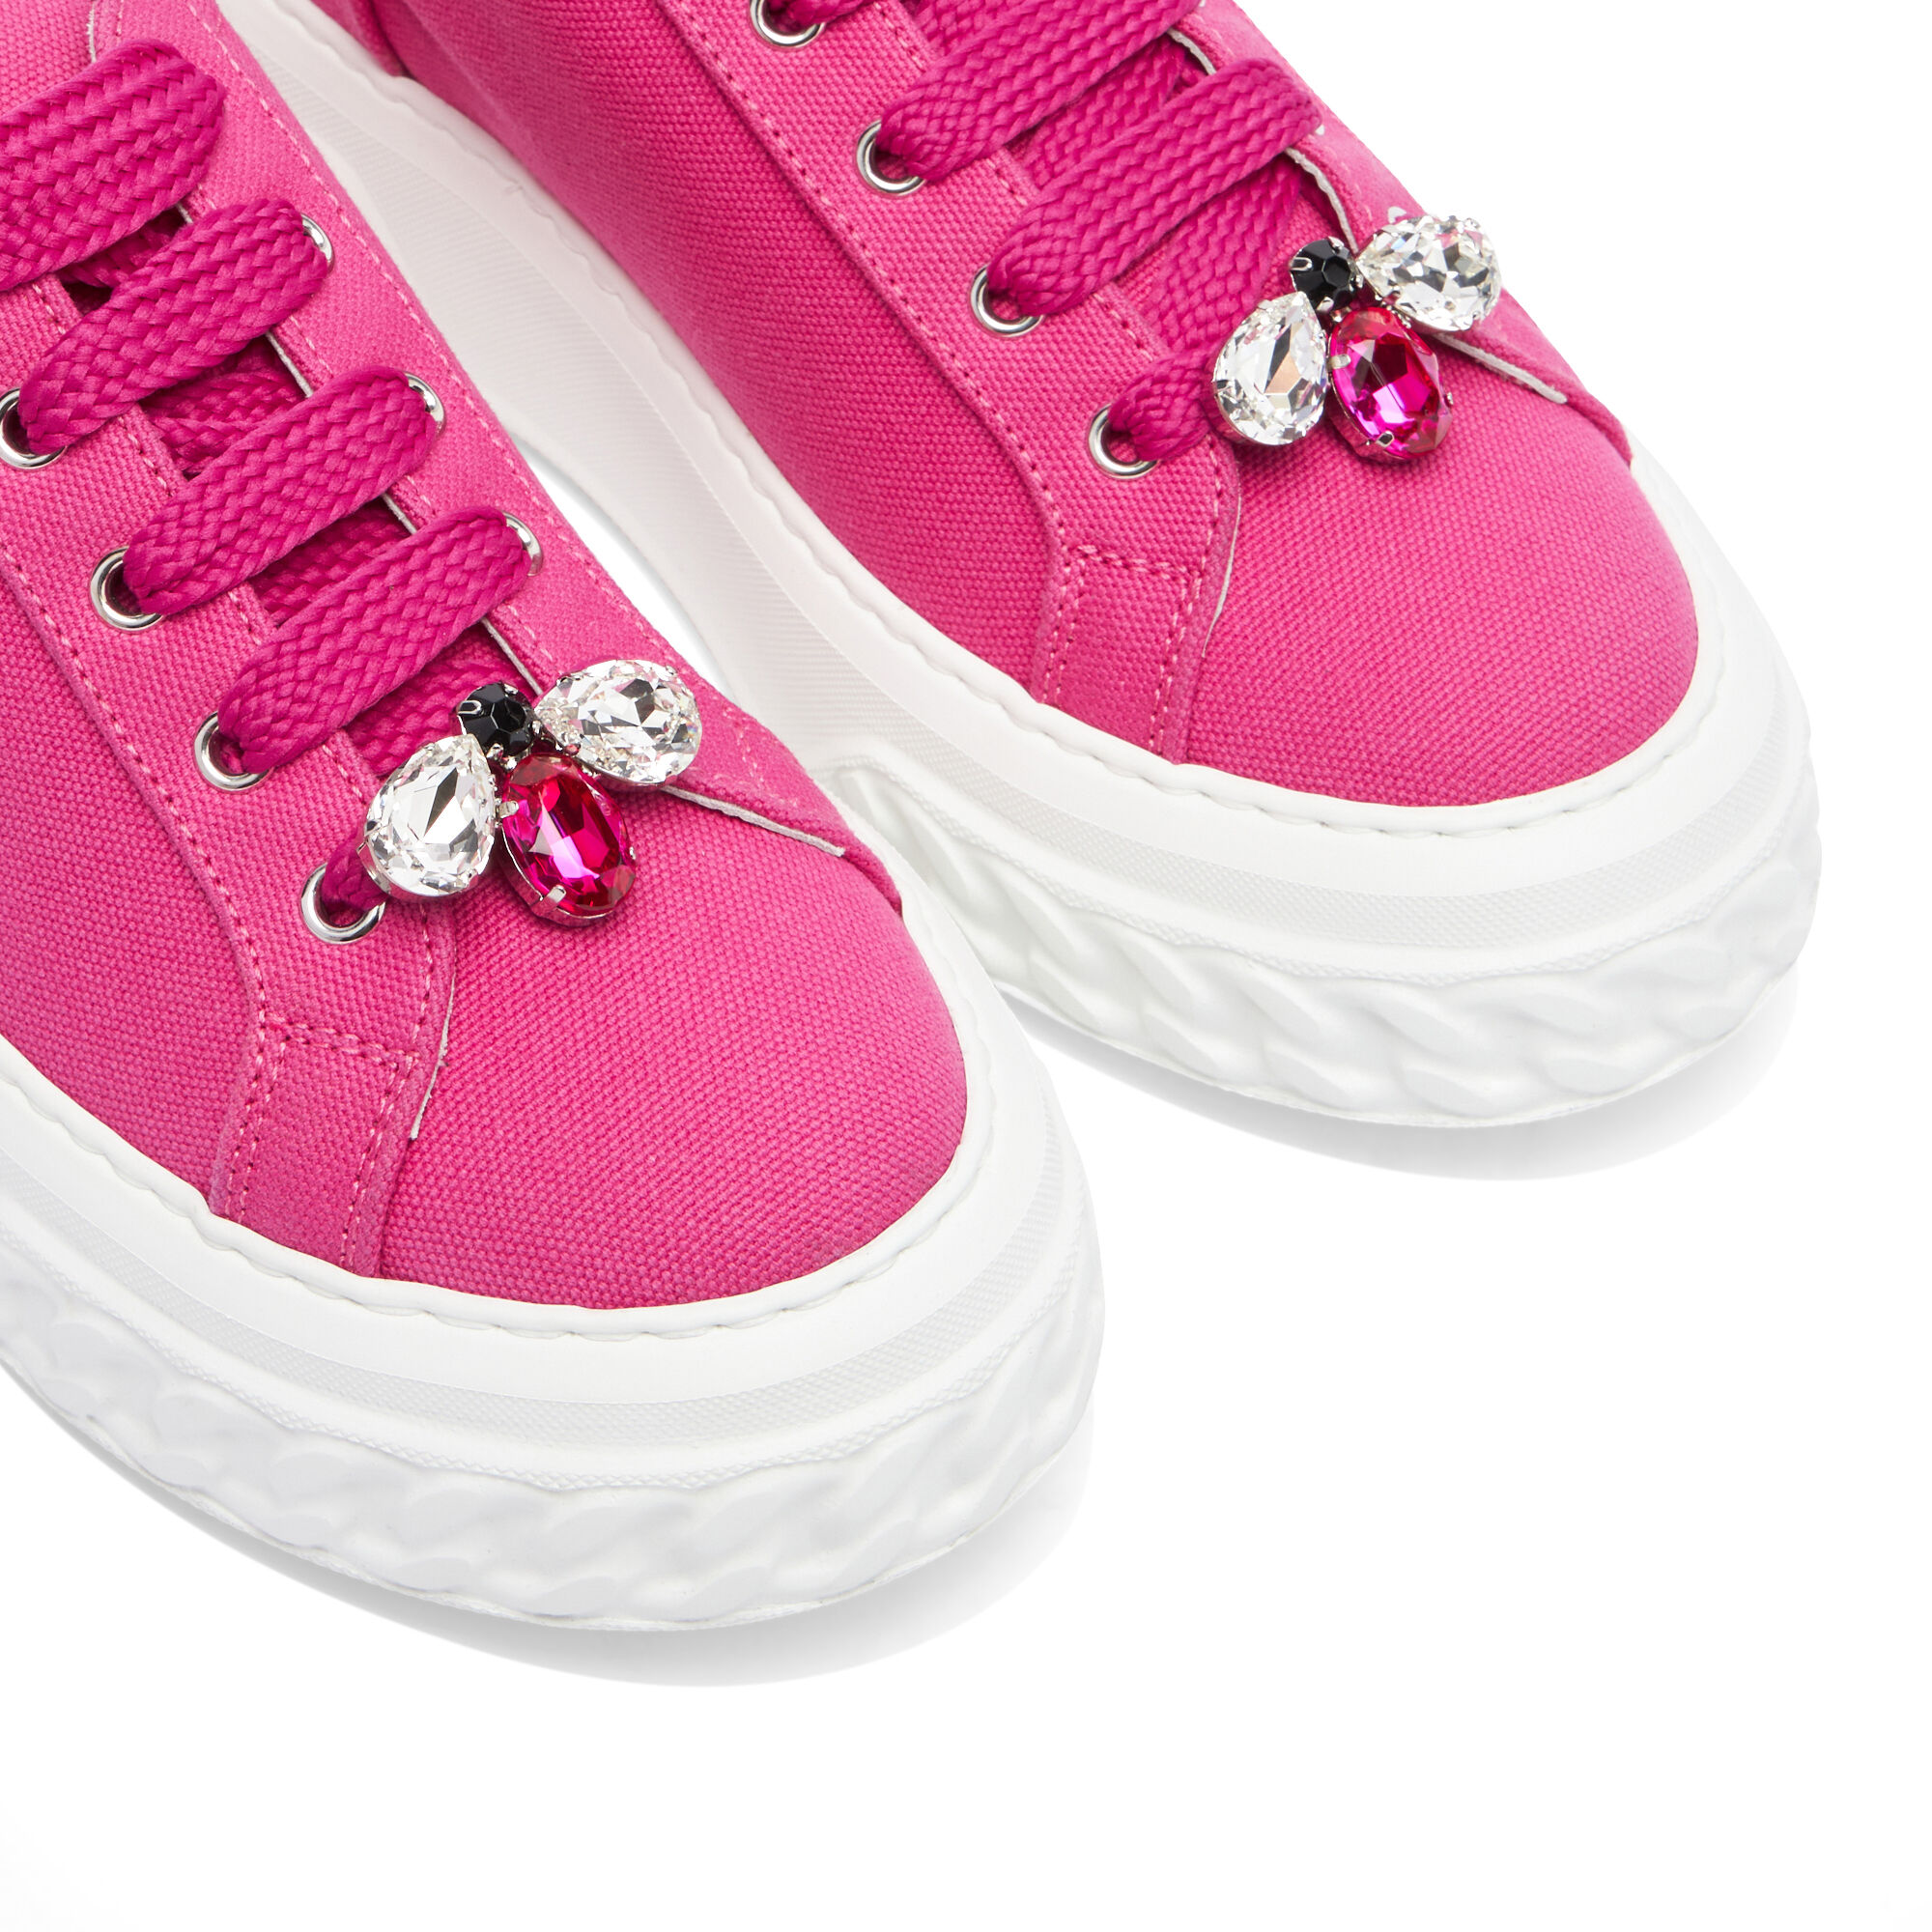 Nike Flex Flury Sneakers Women's 8 Fuchsia Pink Running Cross Training  Shoes | eBay